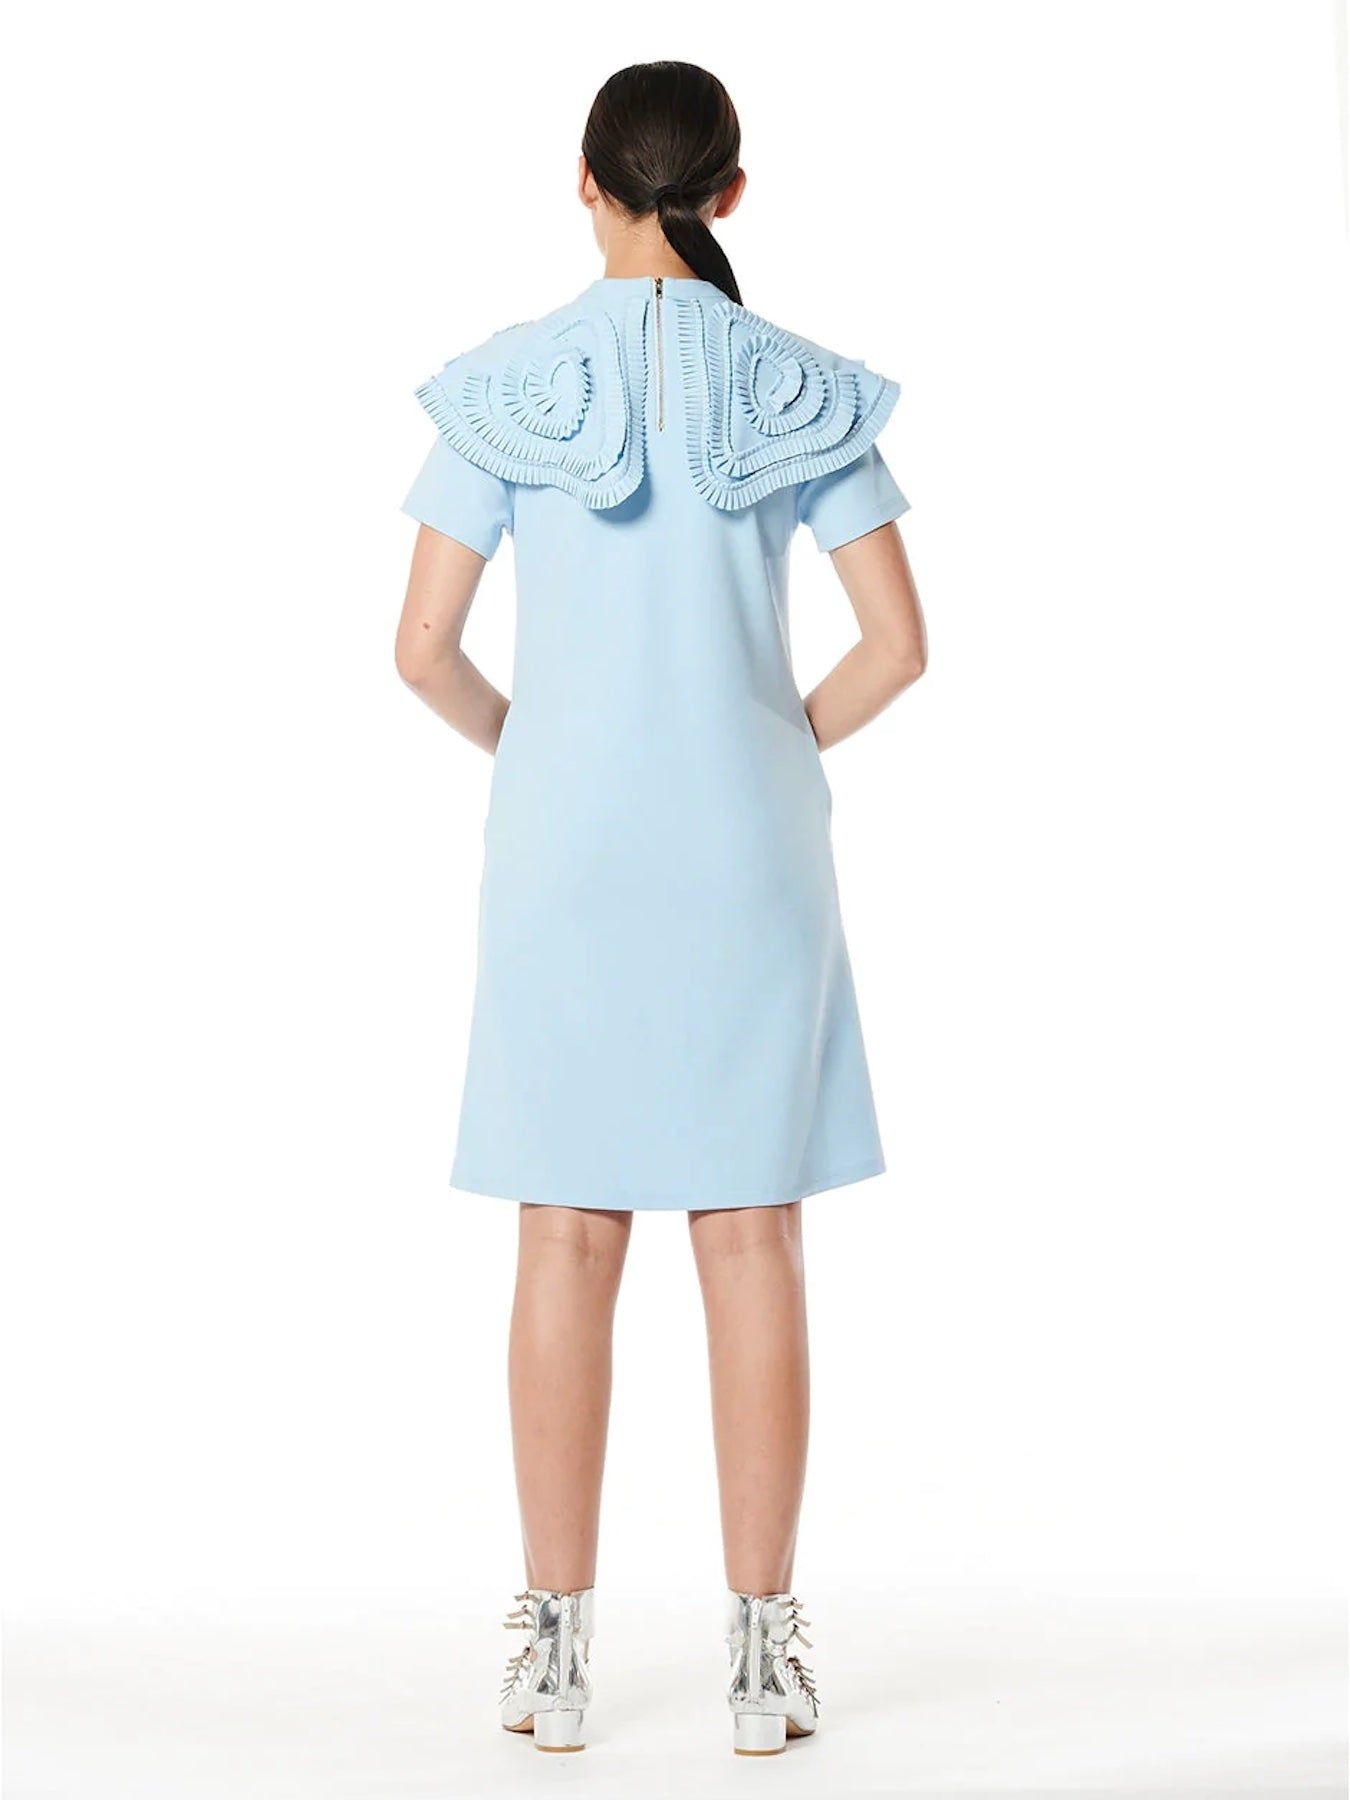 Cap Sleeve Shirt Dress With 3D Ruffled Appliqués - BTK COLLECTION